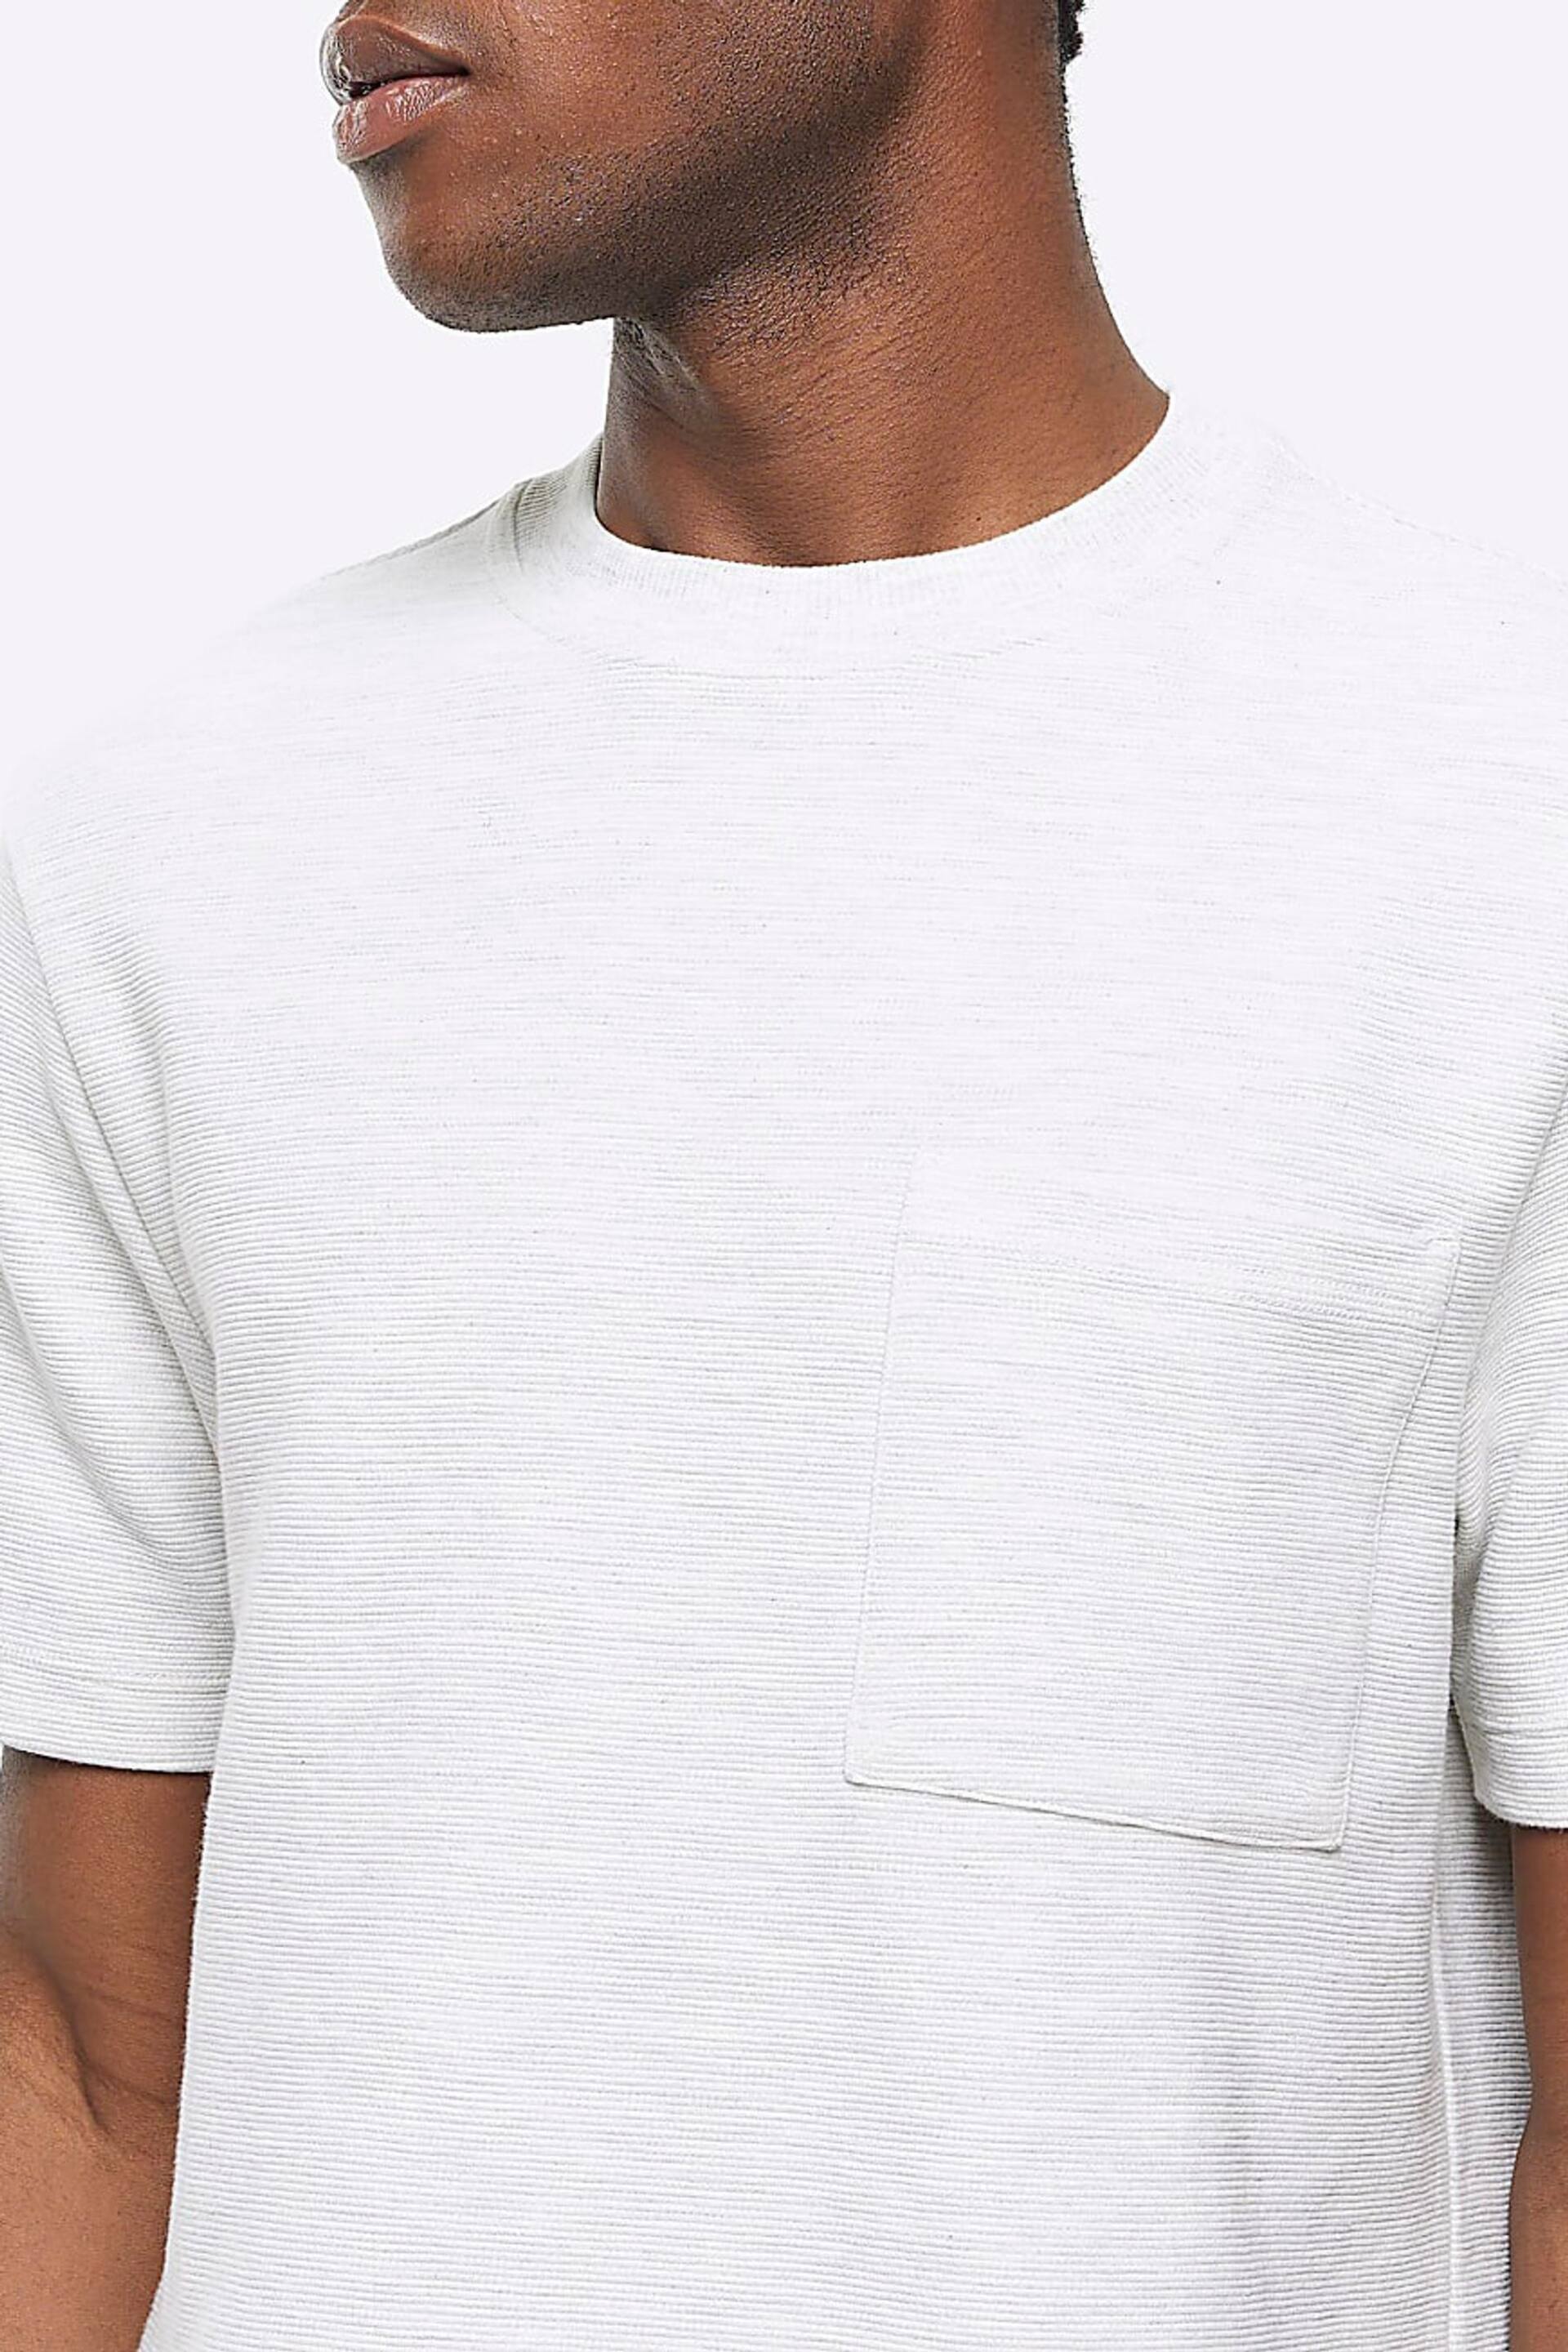 River Island Grey Regular Fit Smart T-Shirt - Image 4 of 5